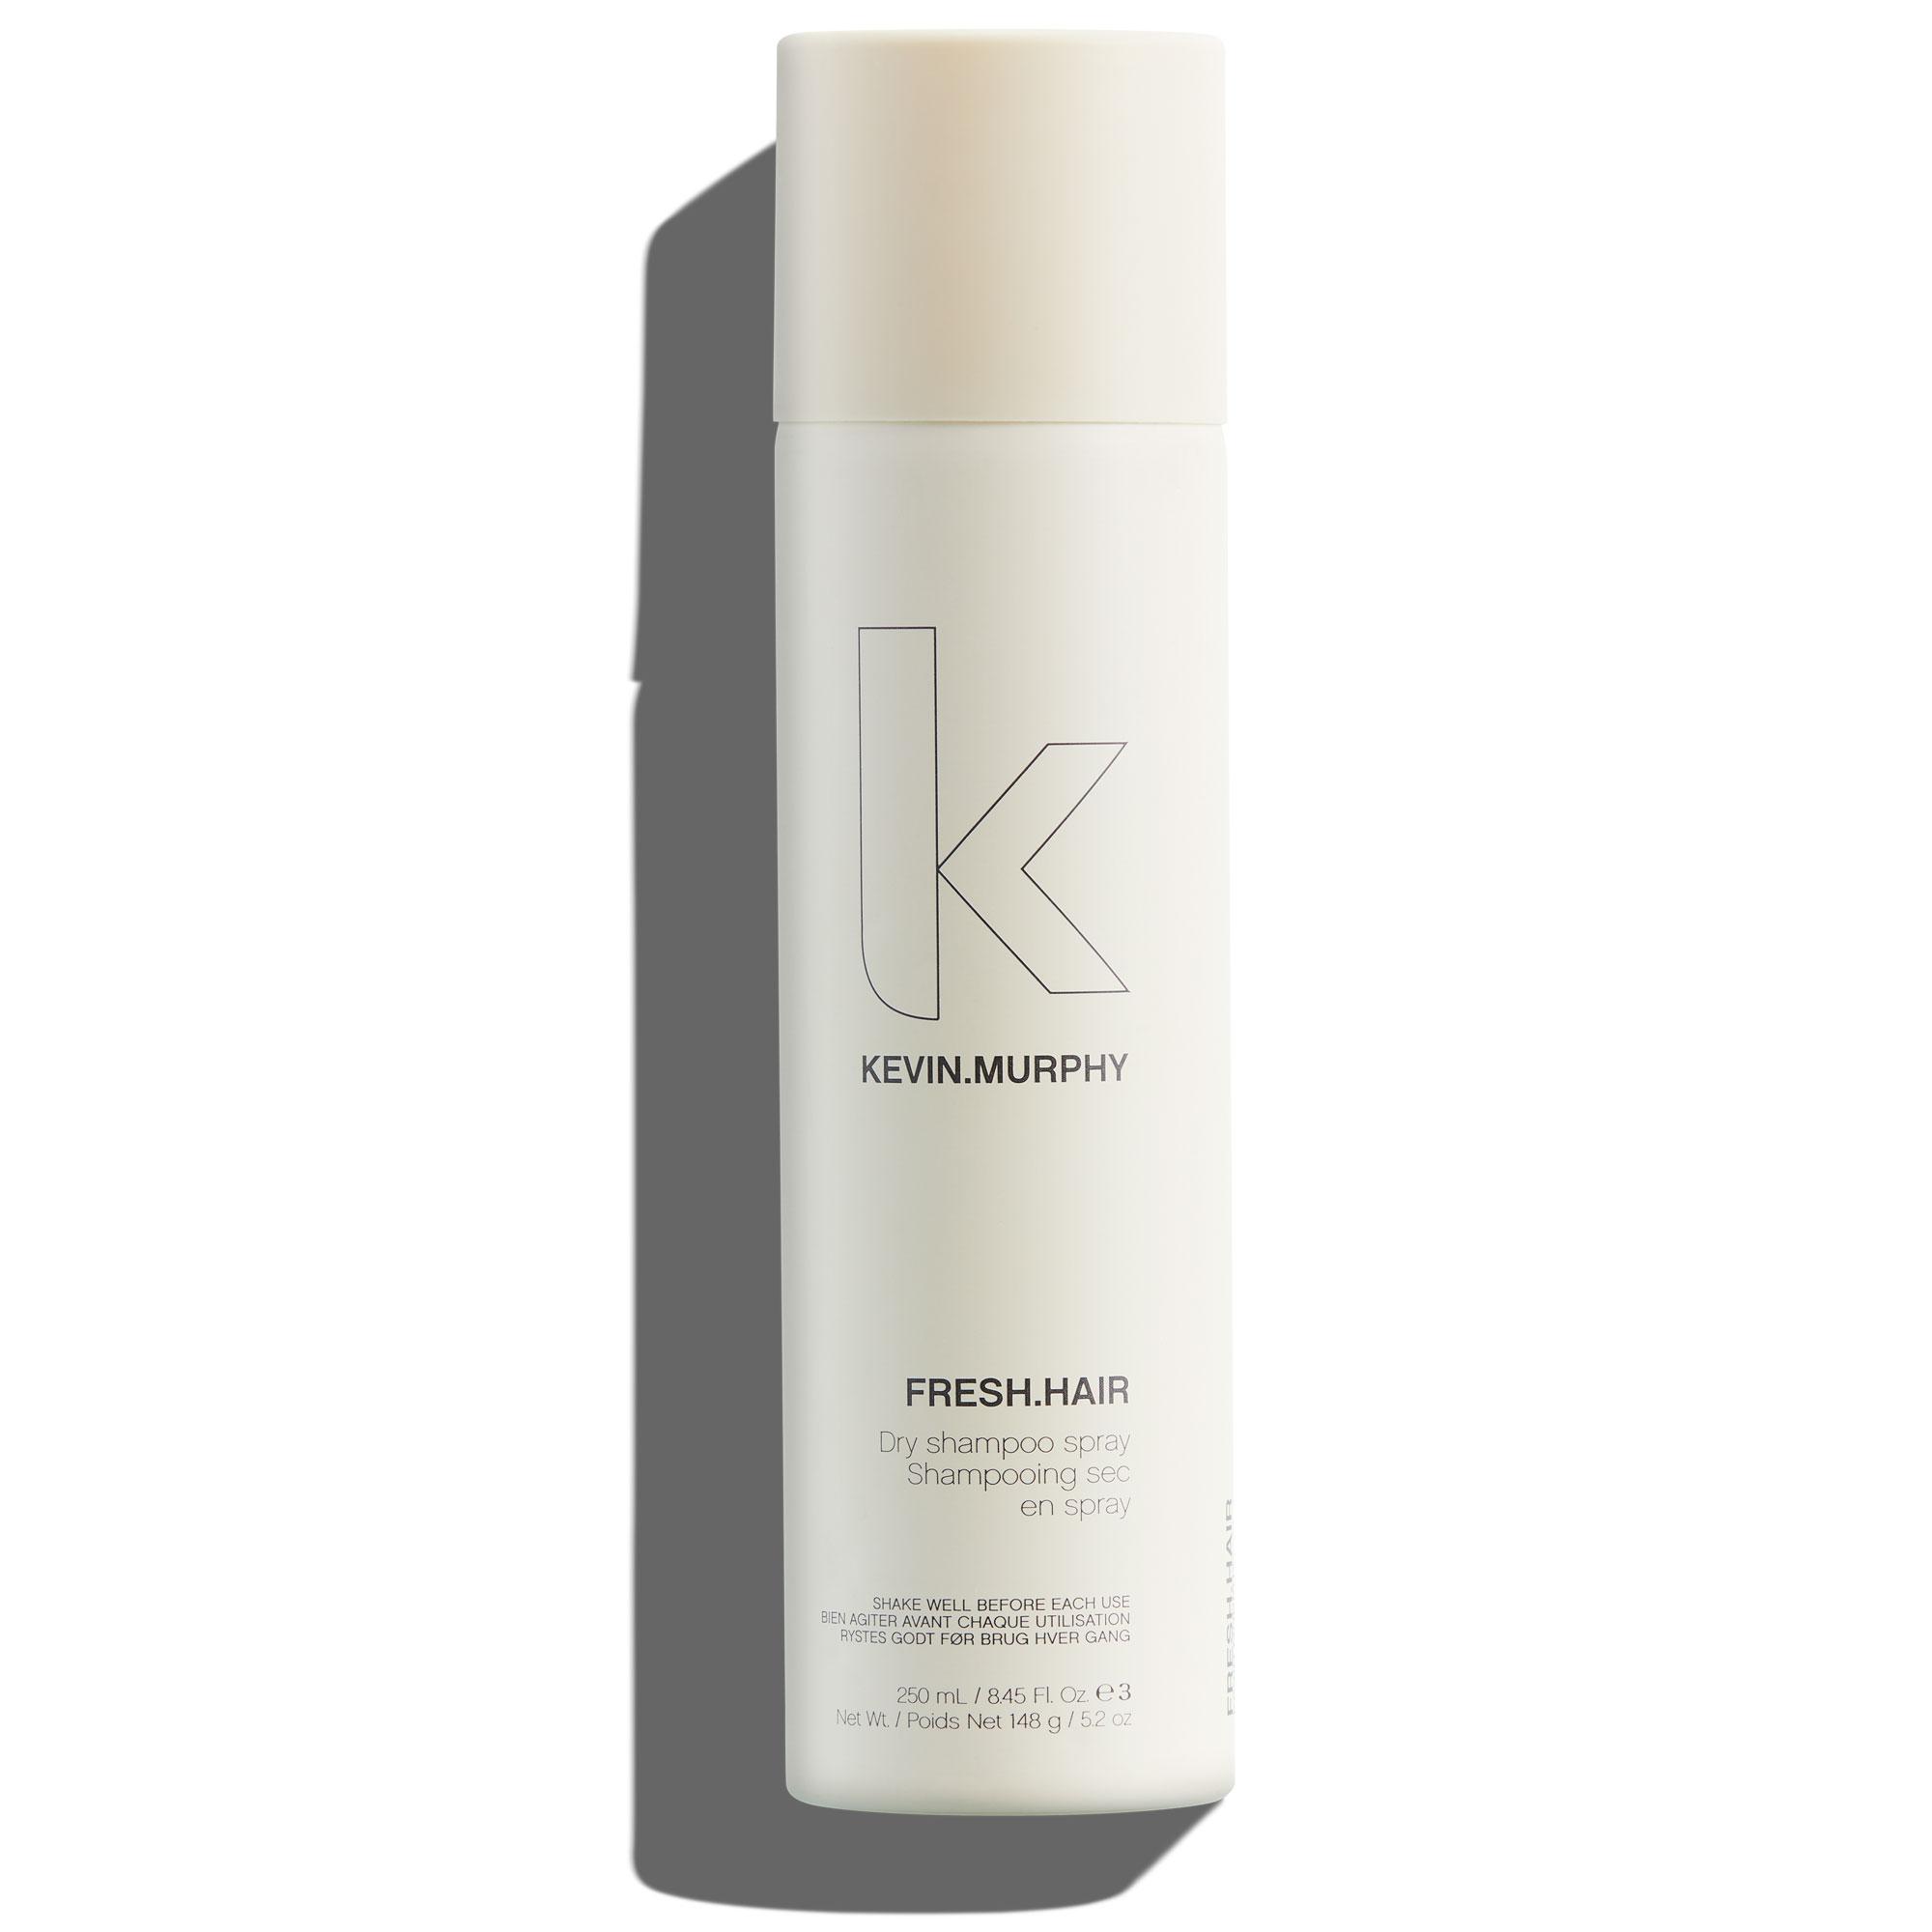 Kevin Murphy Fresh Hair Dry Shampoo Spray, 3.4 oz 